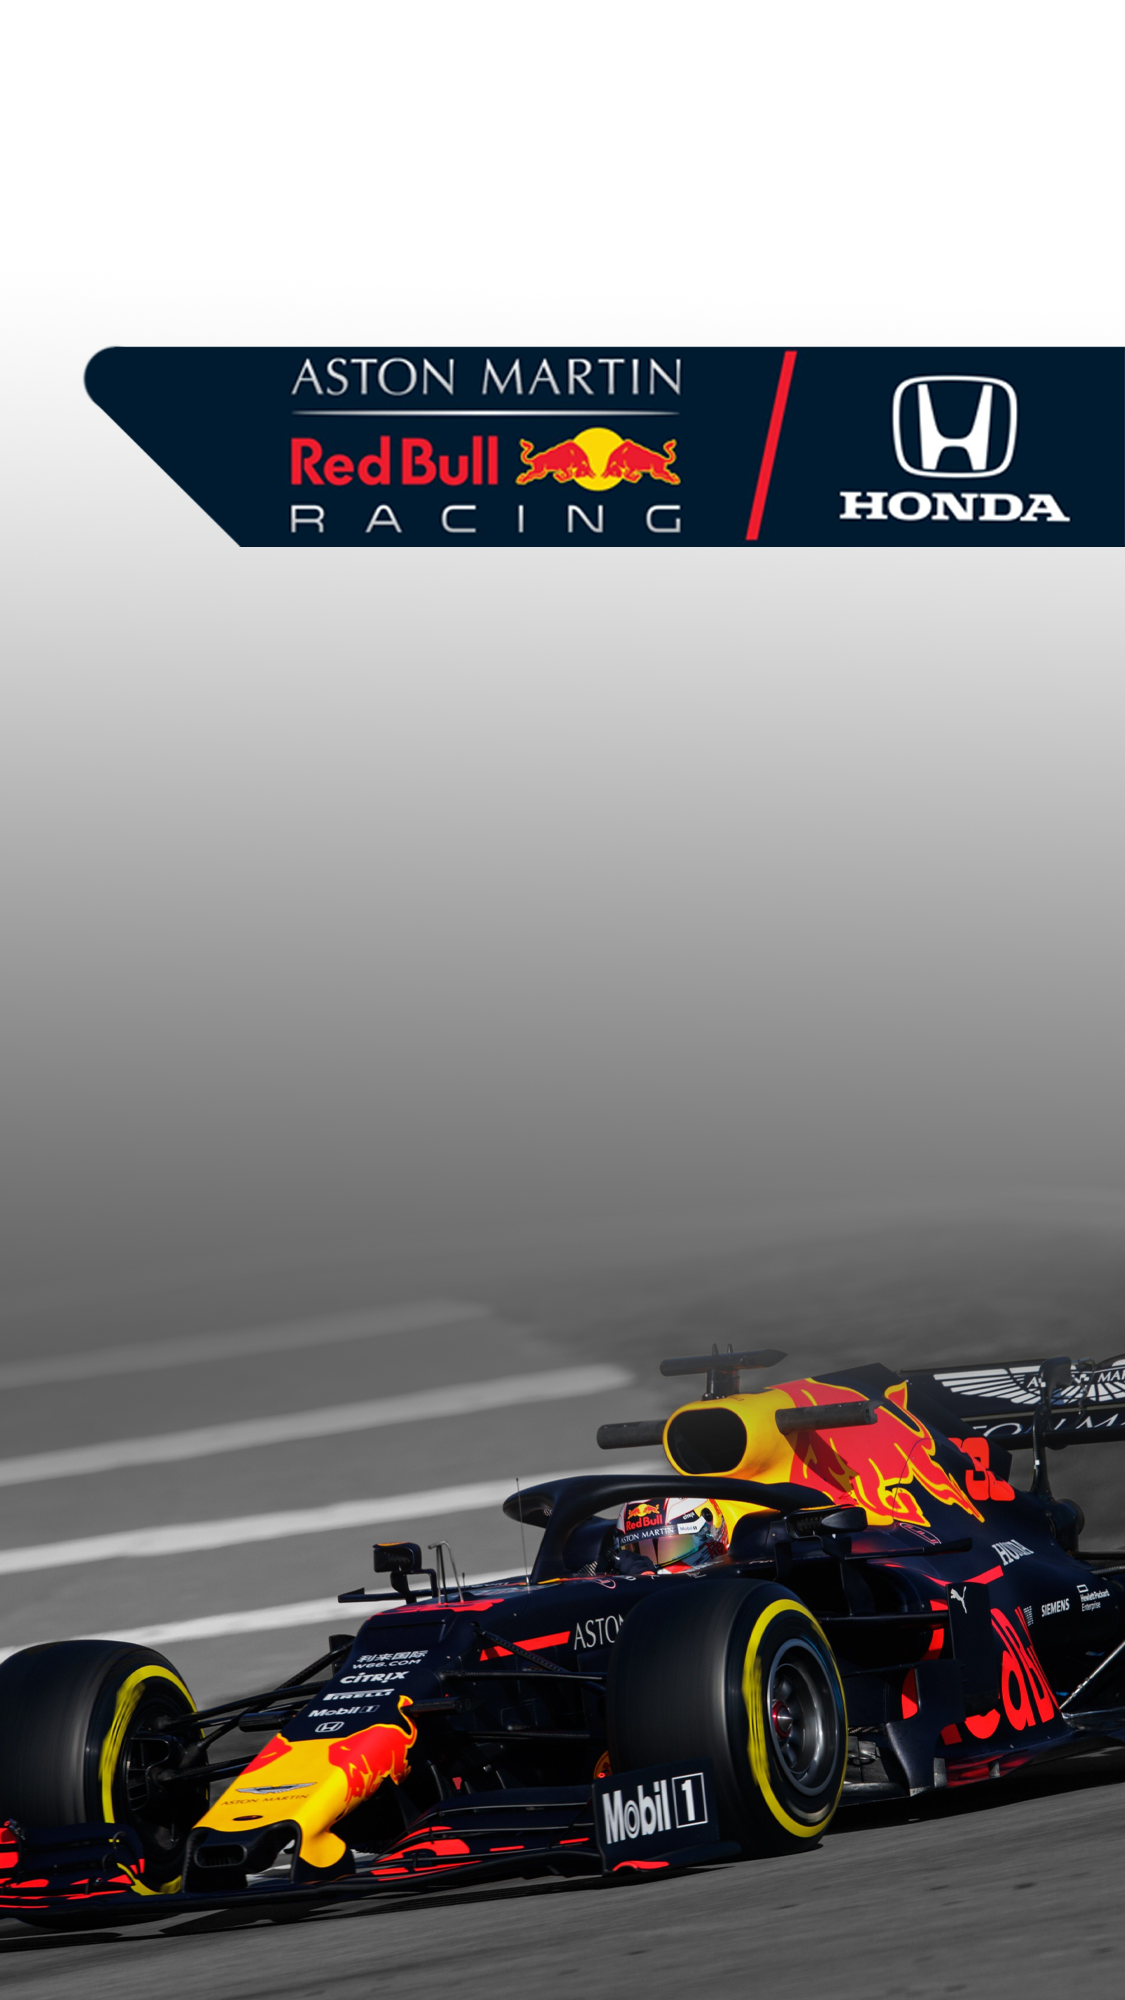 Red Bull Honda wallpaper for older gen iPhones [1125 x 2000]